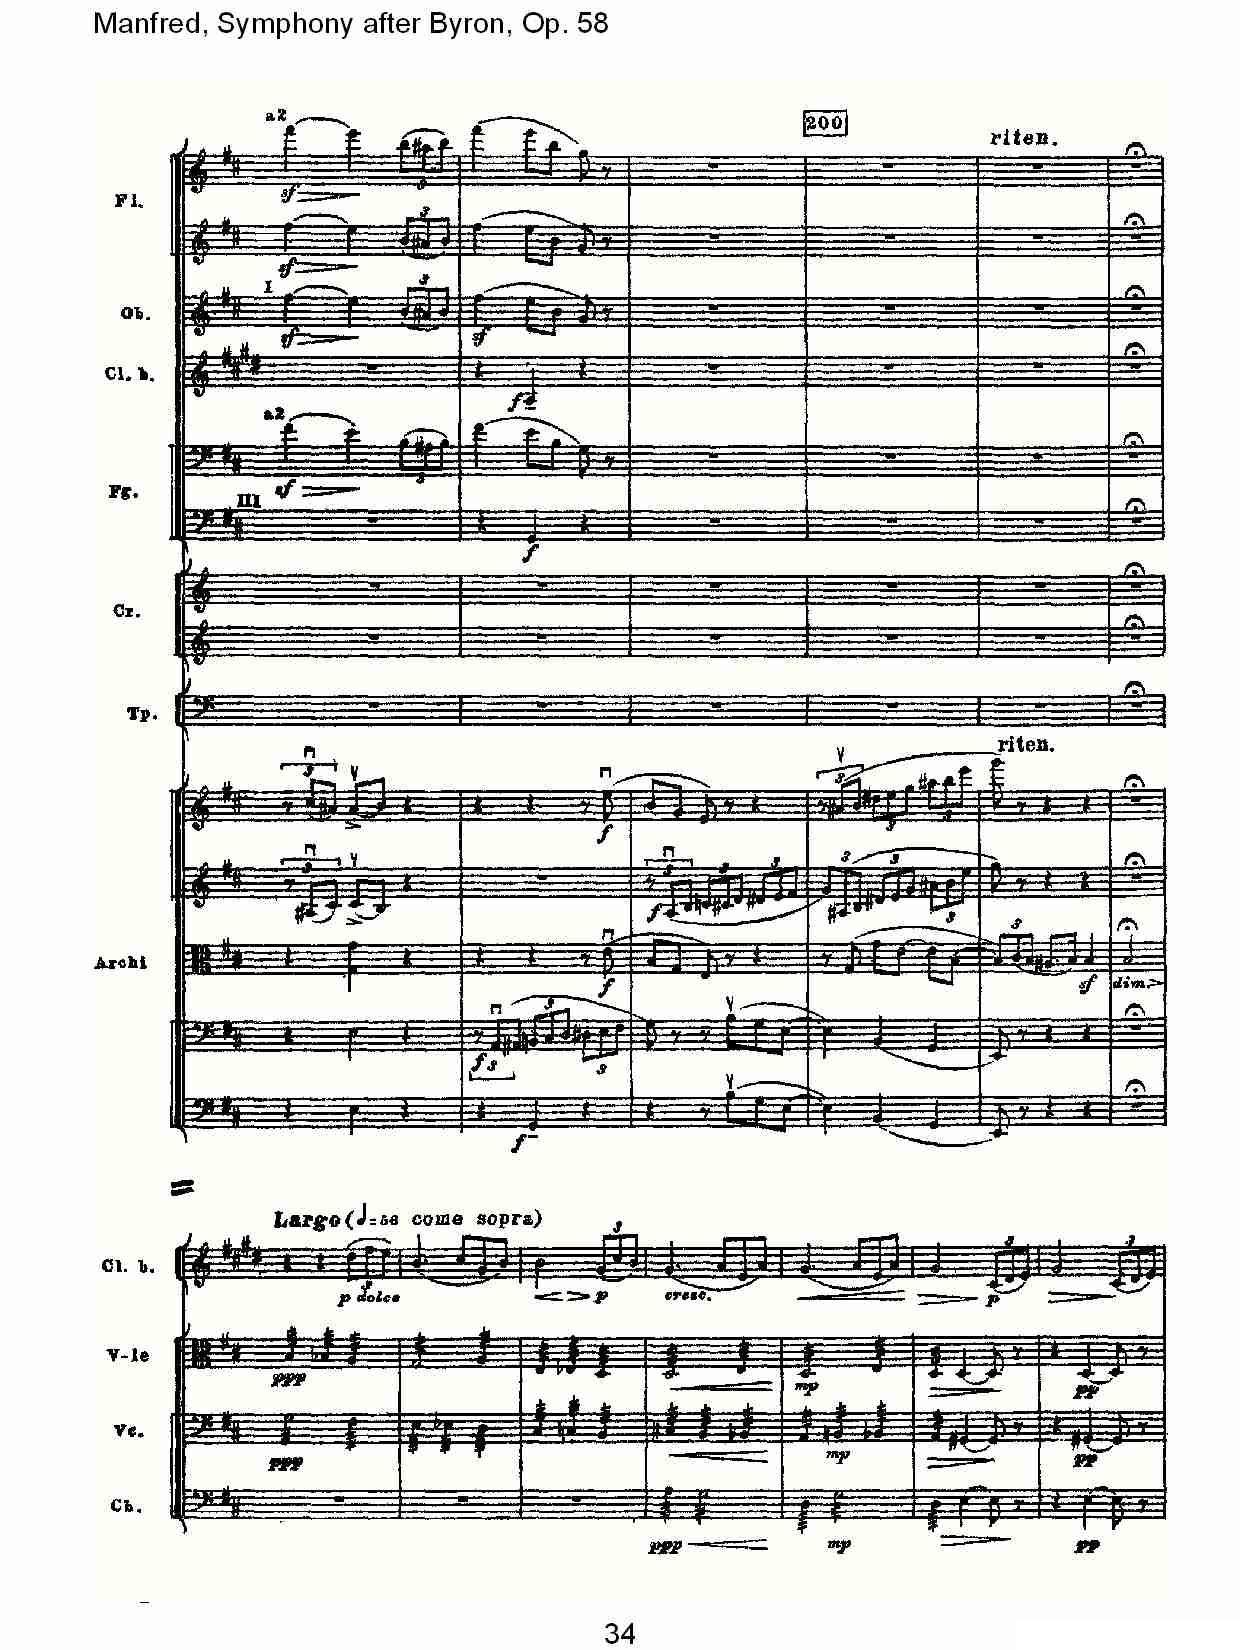 Manfred, Symphony after Byron, Op.58第一乐章（一）其它曲谱（图34）